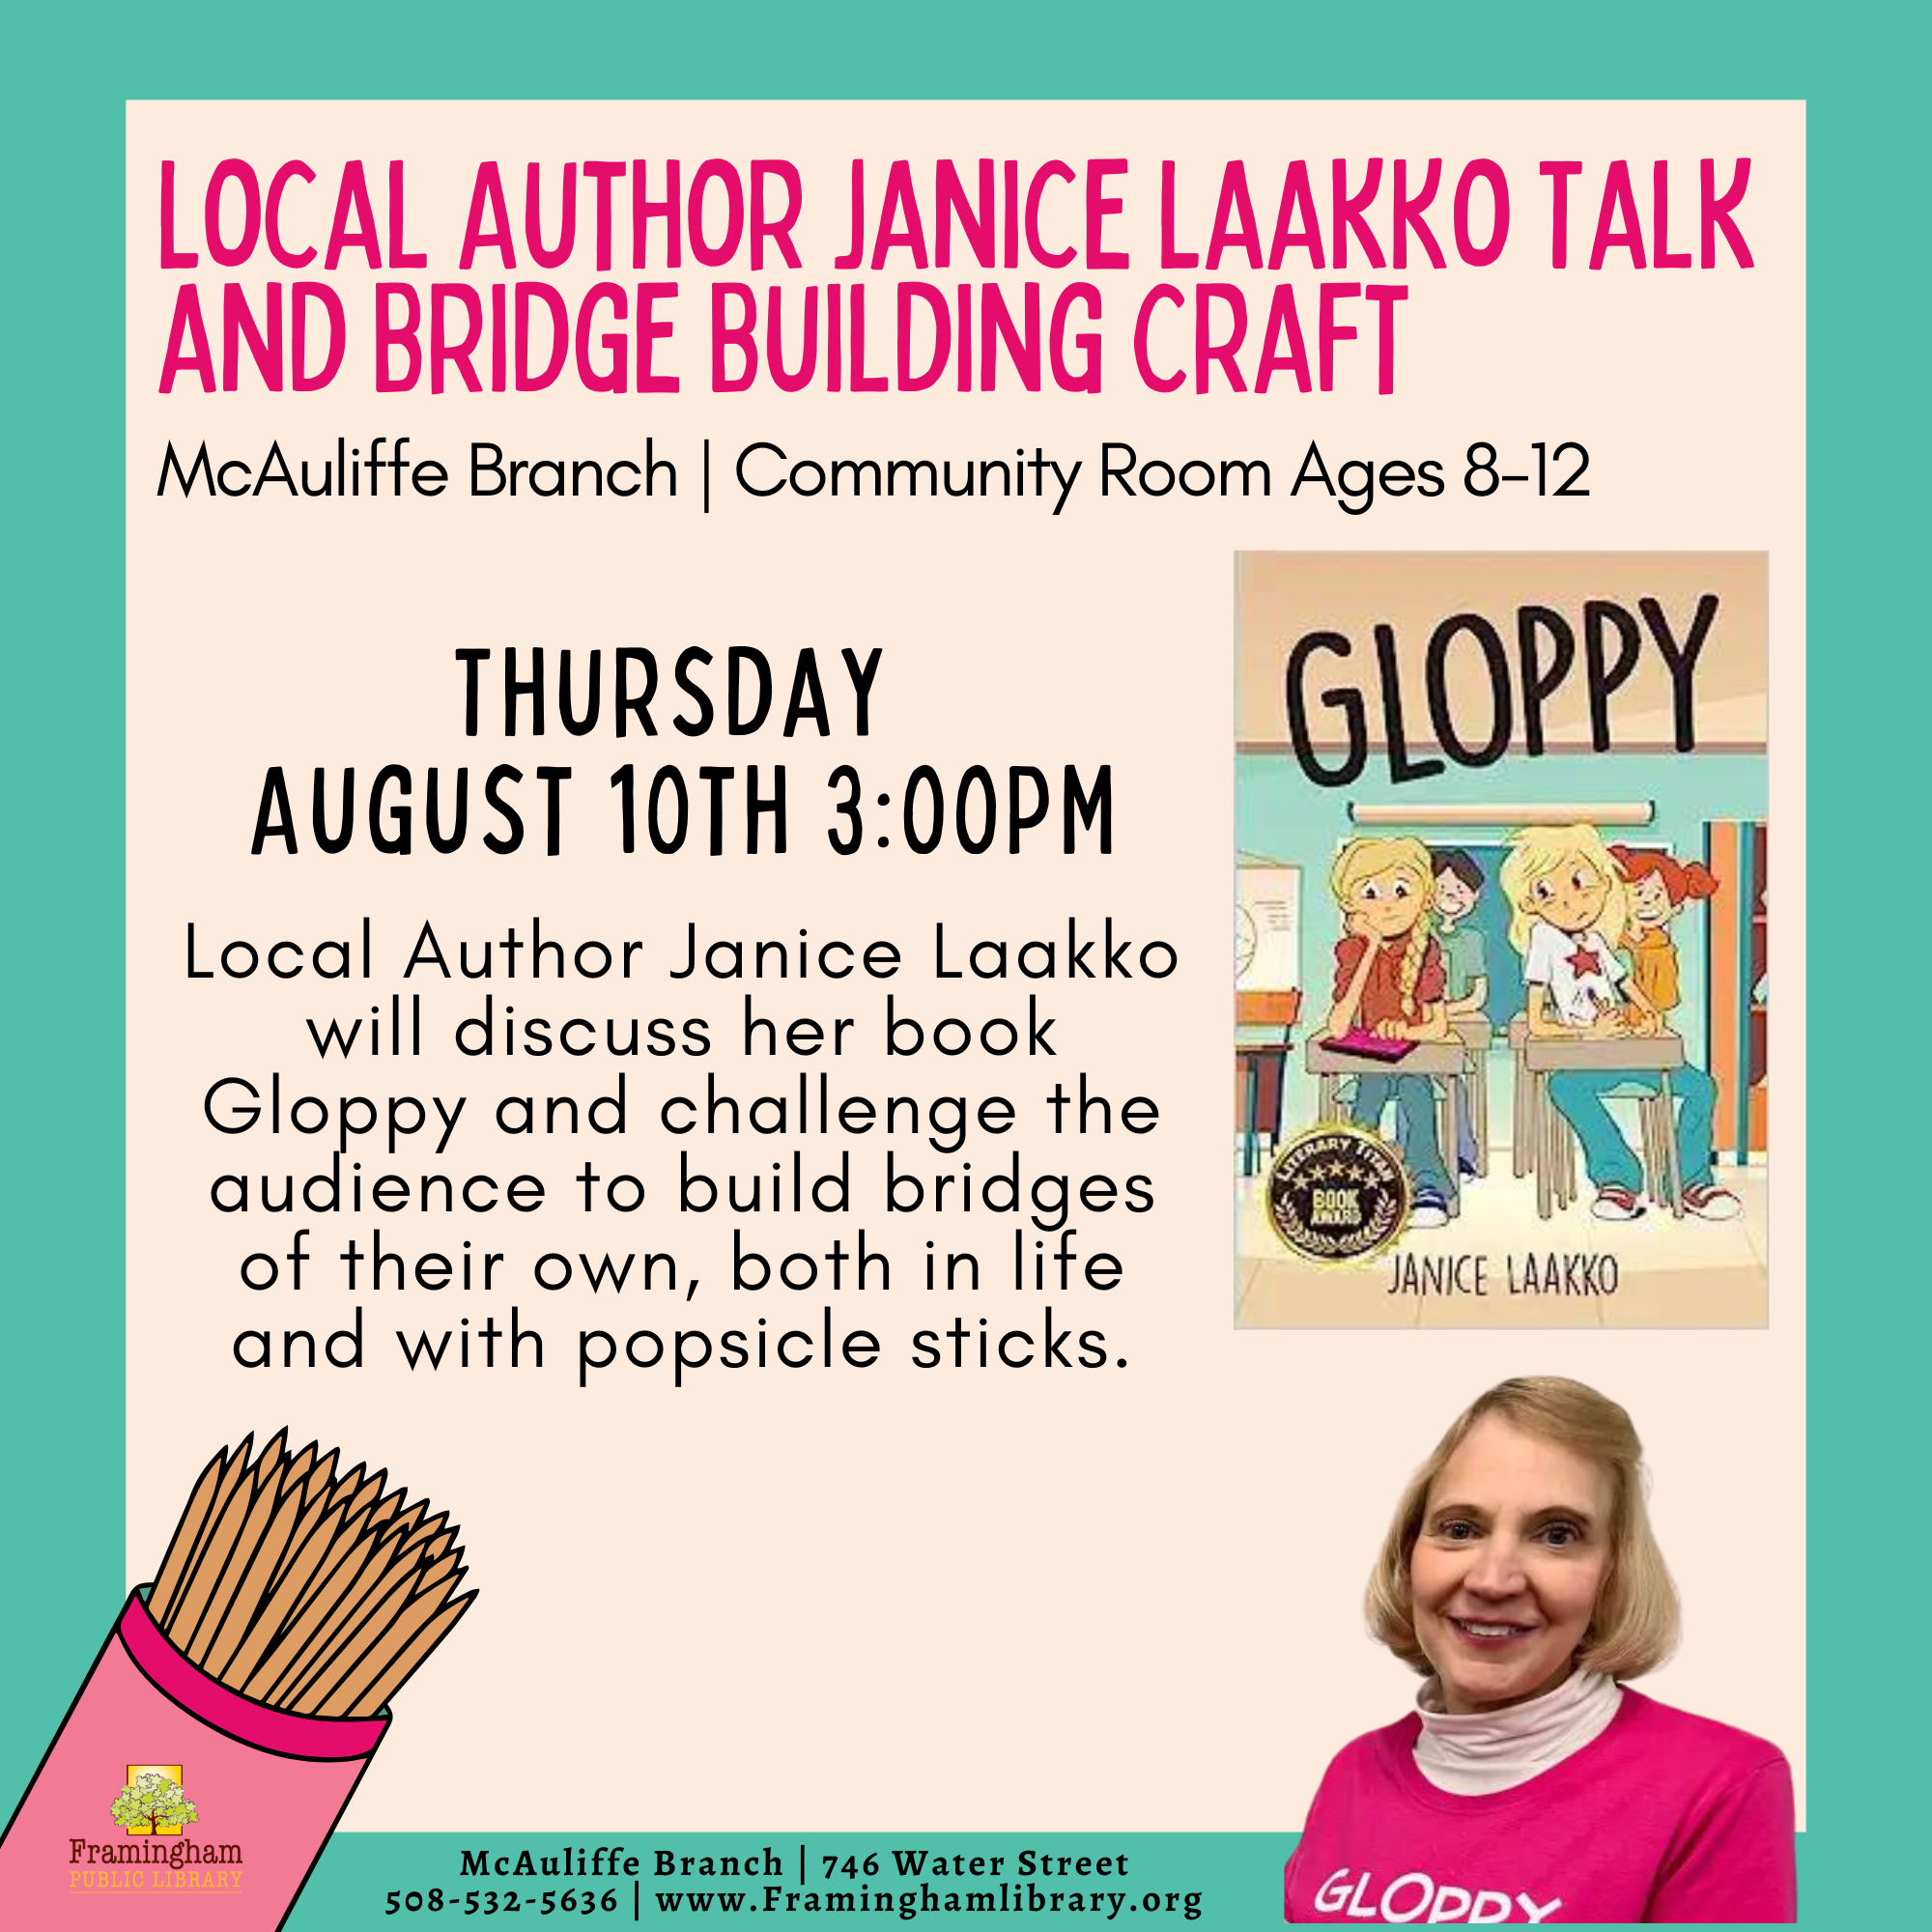 Local Author Janice Laakko Talk and Bridge Building Craft thumbnail Photo